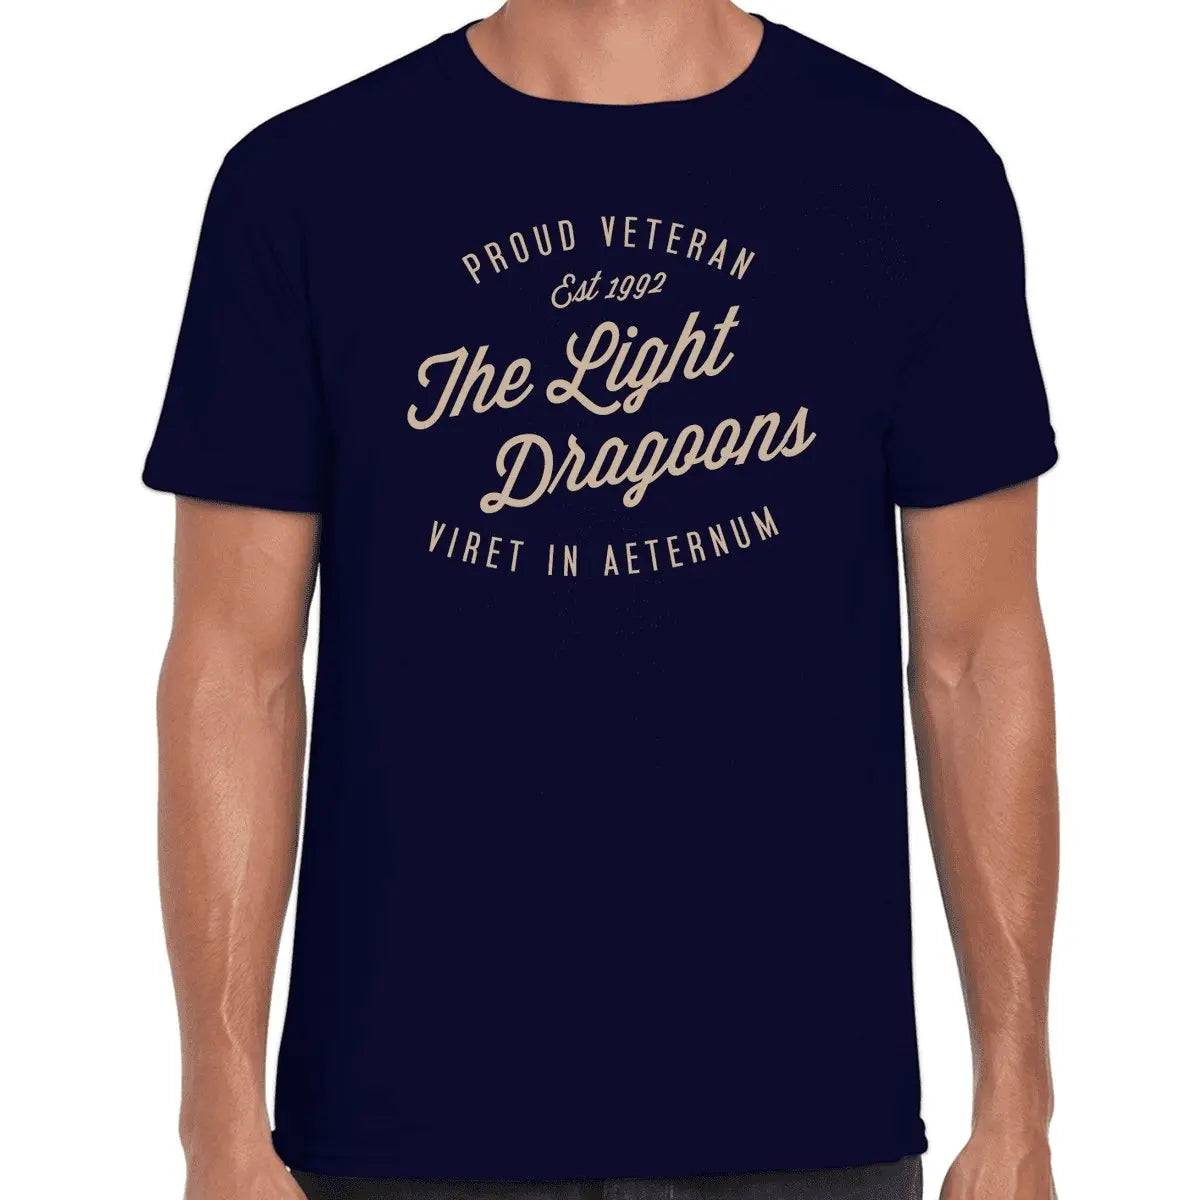 Light Dragoons Vintage T Shirt redplume